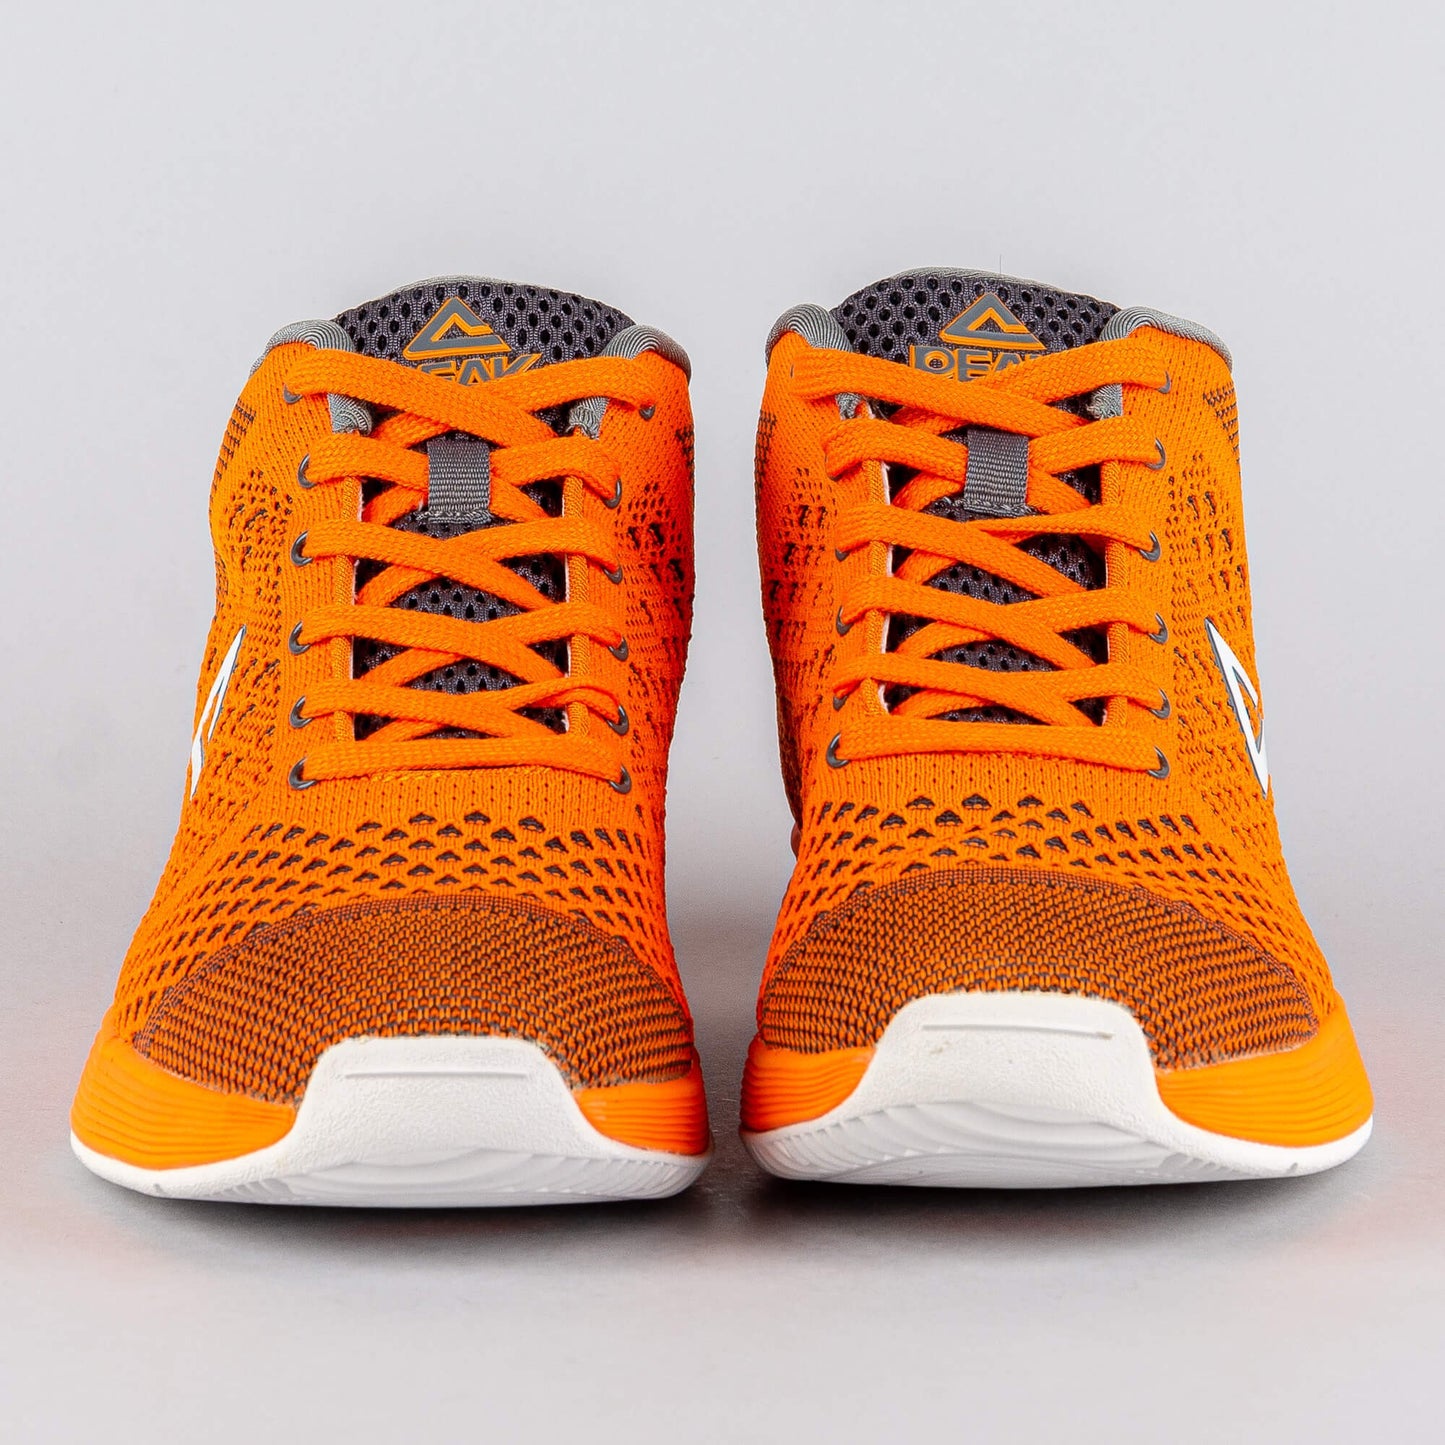 Peak Basketball Shoes Primeknit Fluorescent Orange/Gray